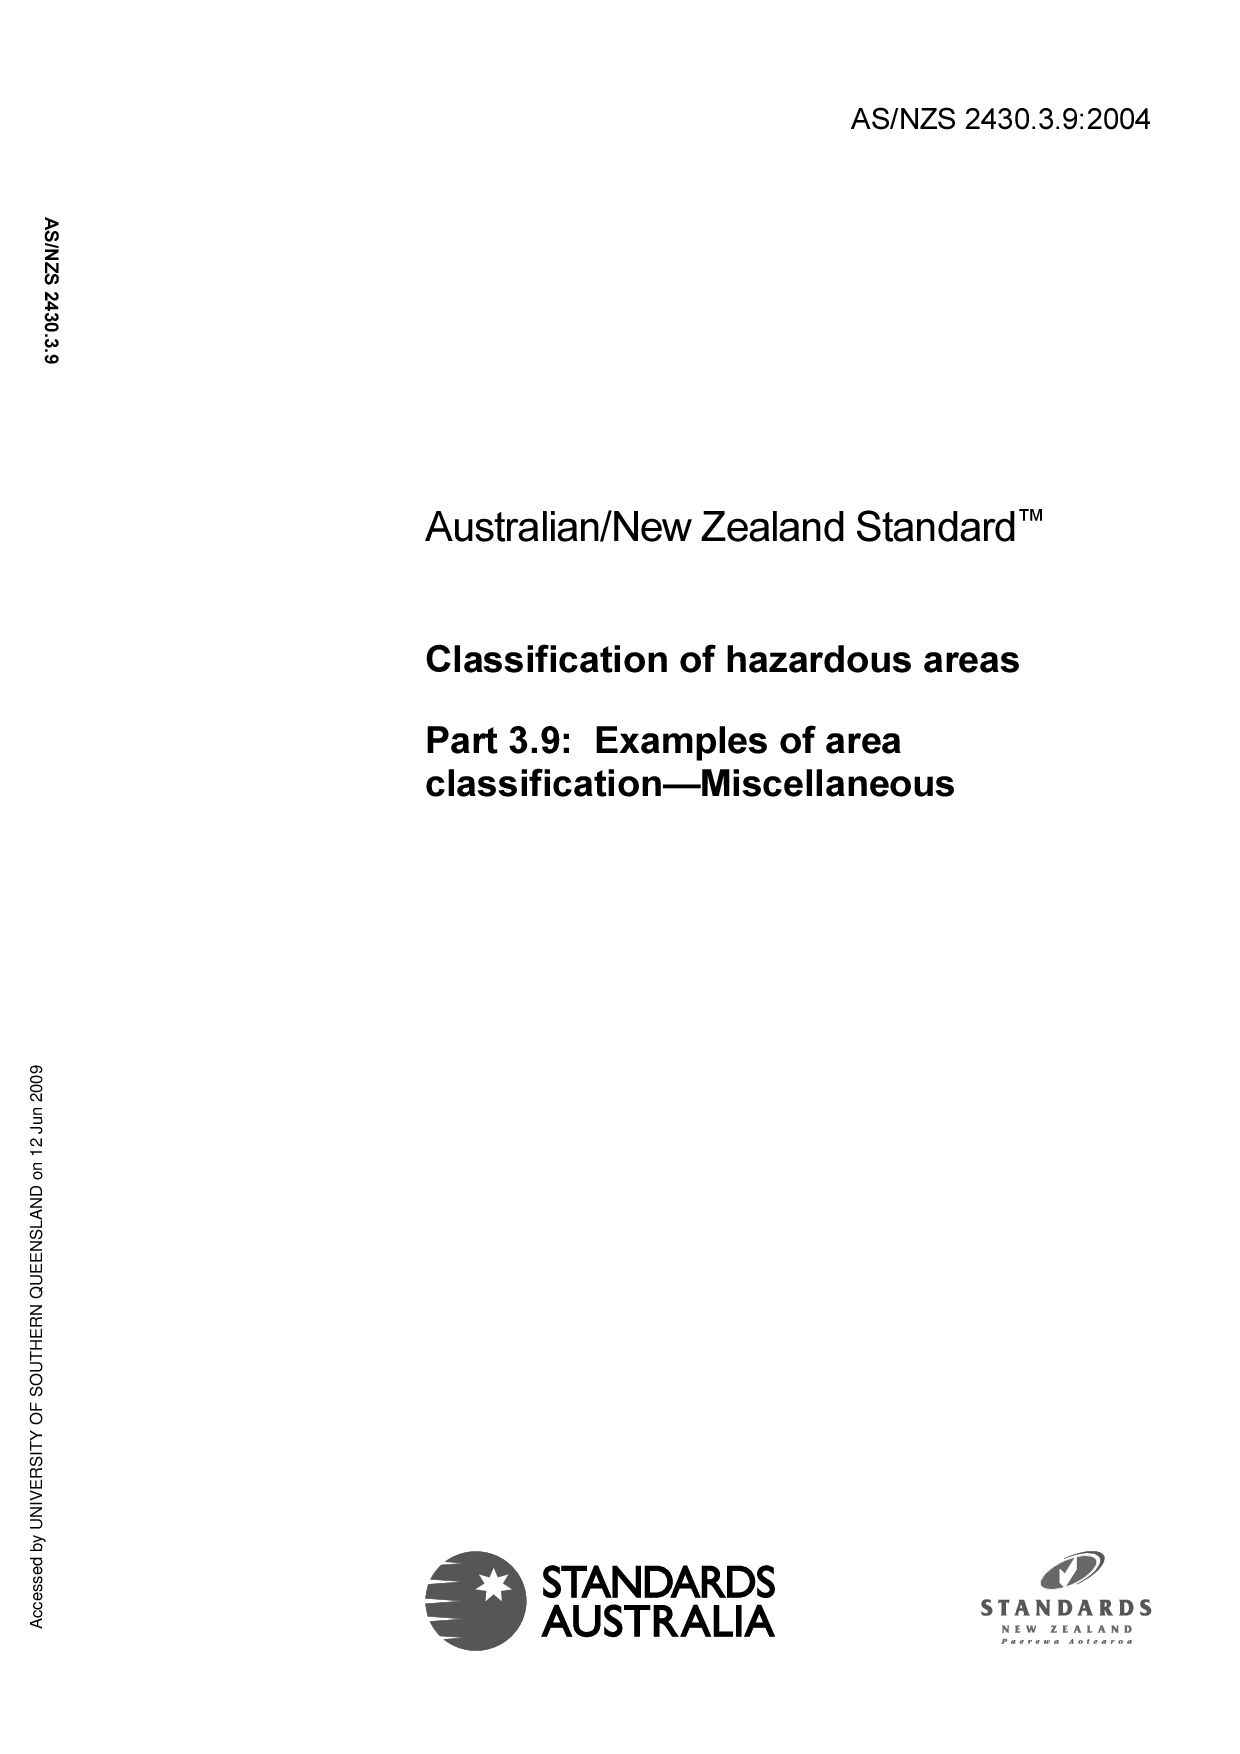 AS/NZS 2430.3.9-2004